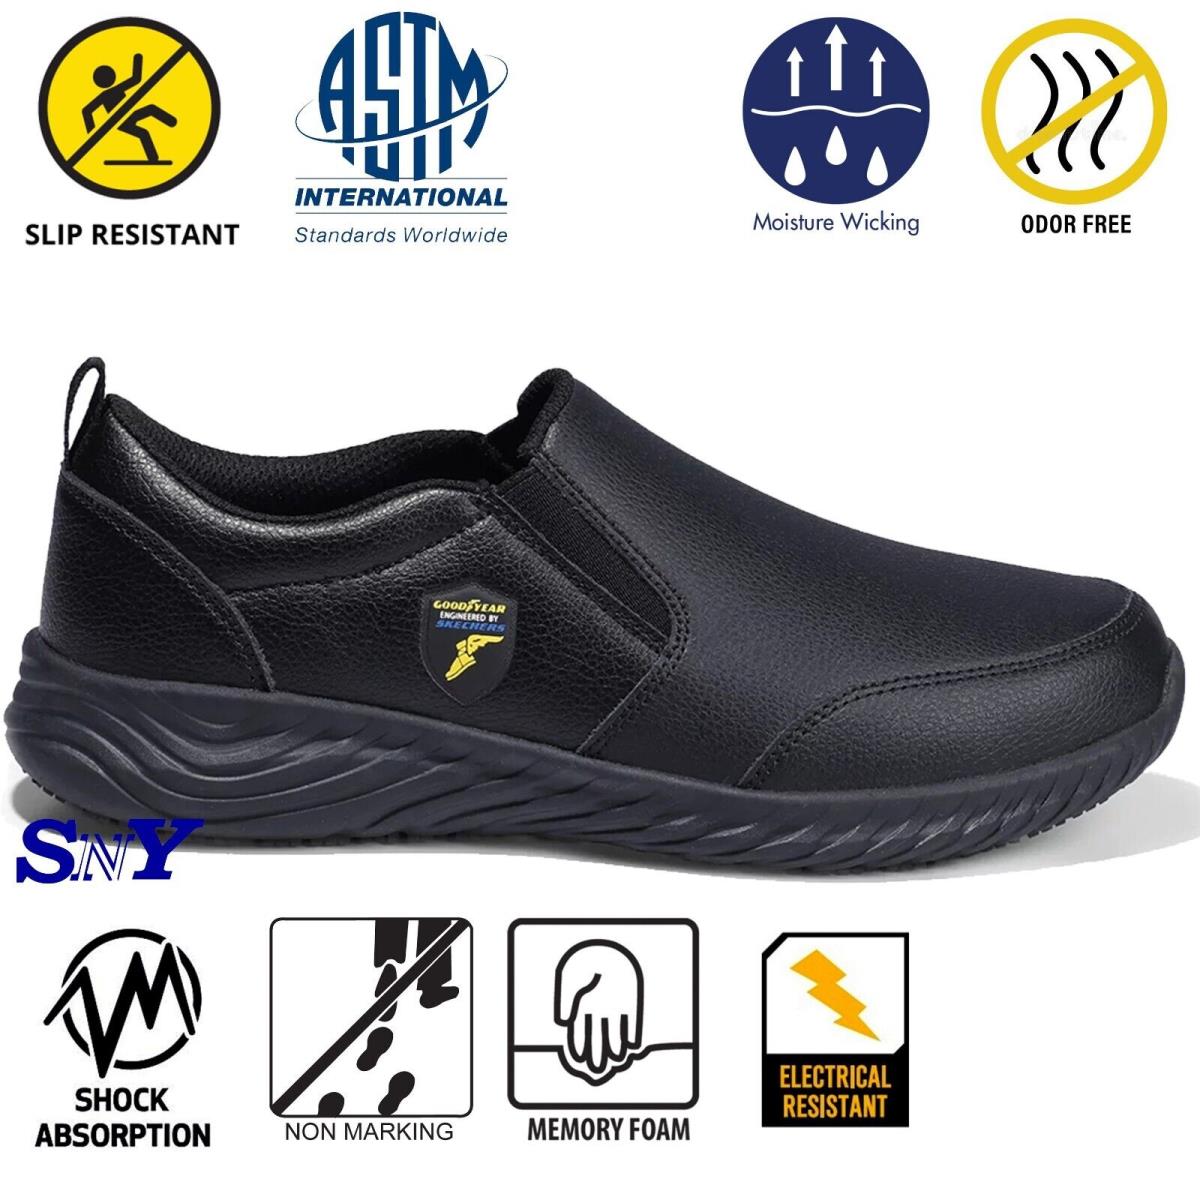 Skechers Goodyear Men`s Slip-resistant Lightweight Service Work Shoes Astm Rated